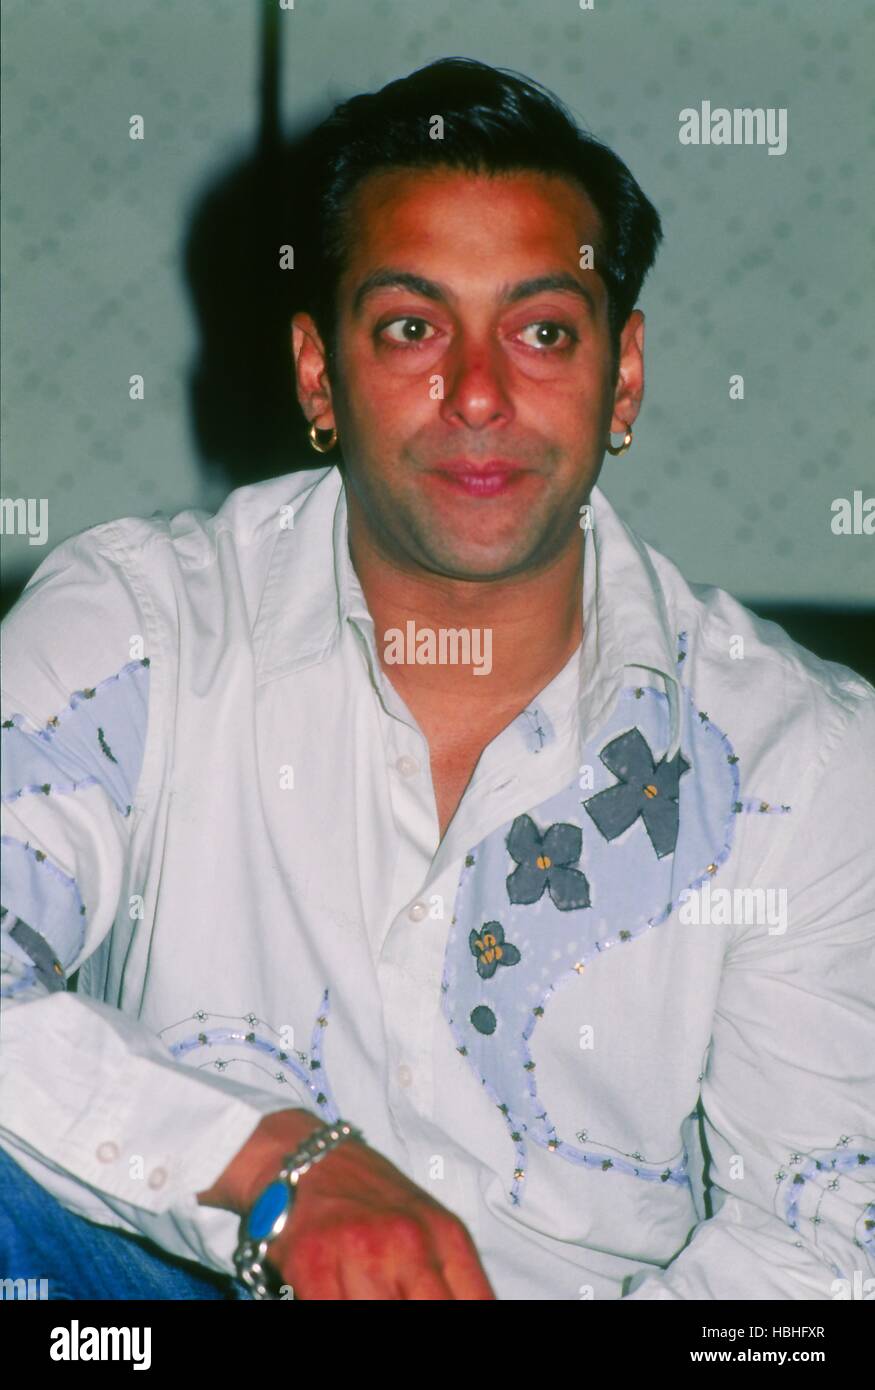 Salman Khan, Abdul Rashid Salim Salman Khan, indischer Filmschauspieler, Produzent, Sänger, Fernsehpersönlichkeit, Bombay, Mumbai, Maharashtra, Indien, Asien Stockfoto